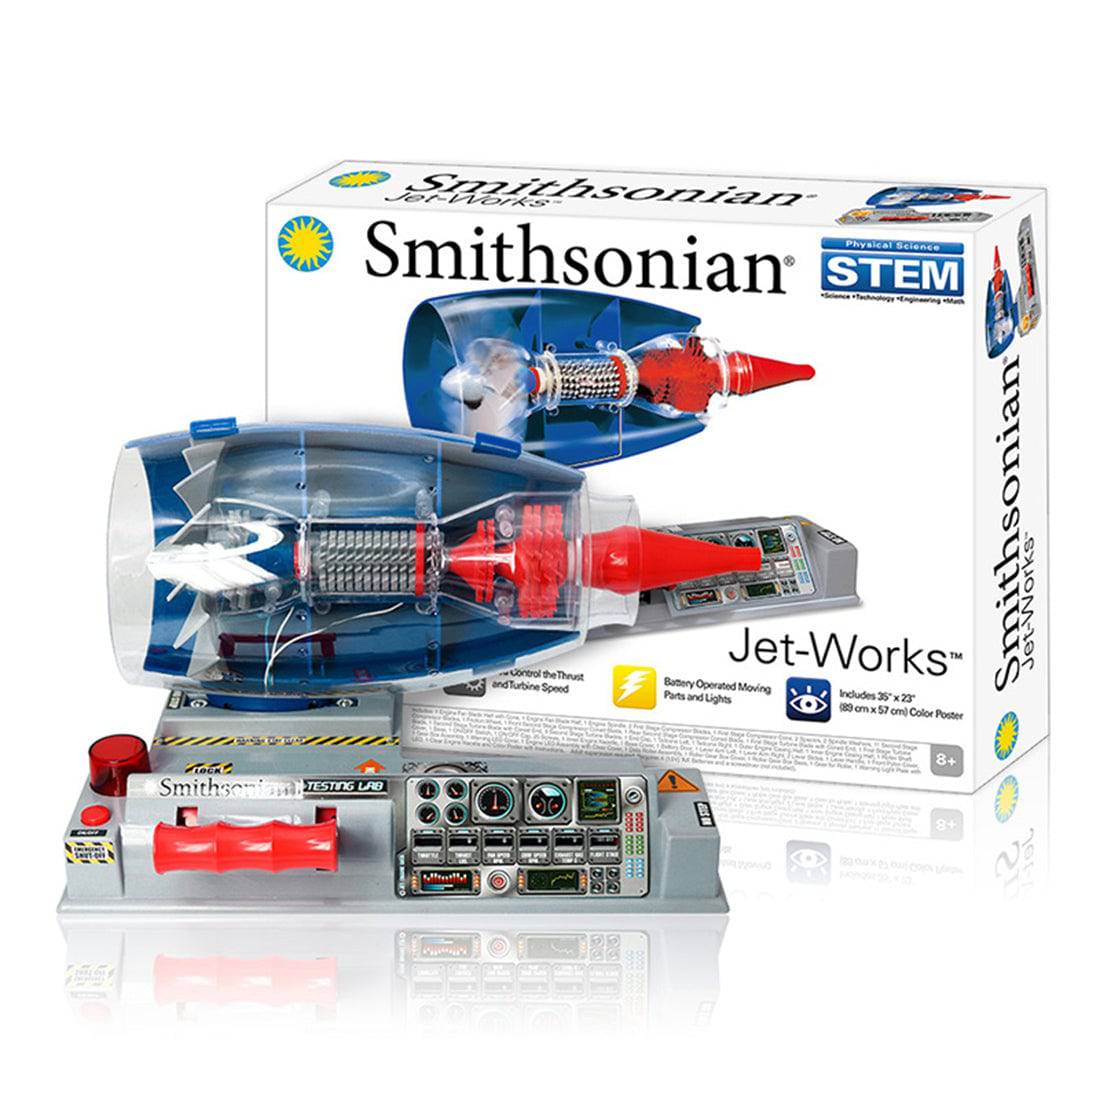 Smithsonian Electric Jet-Works DIY Turbofan Engine Model STEM Kit Steam Physical Science Toy